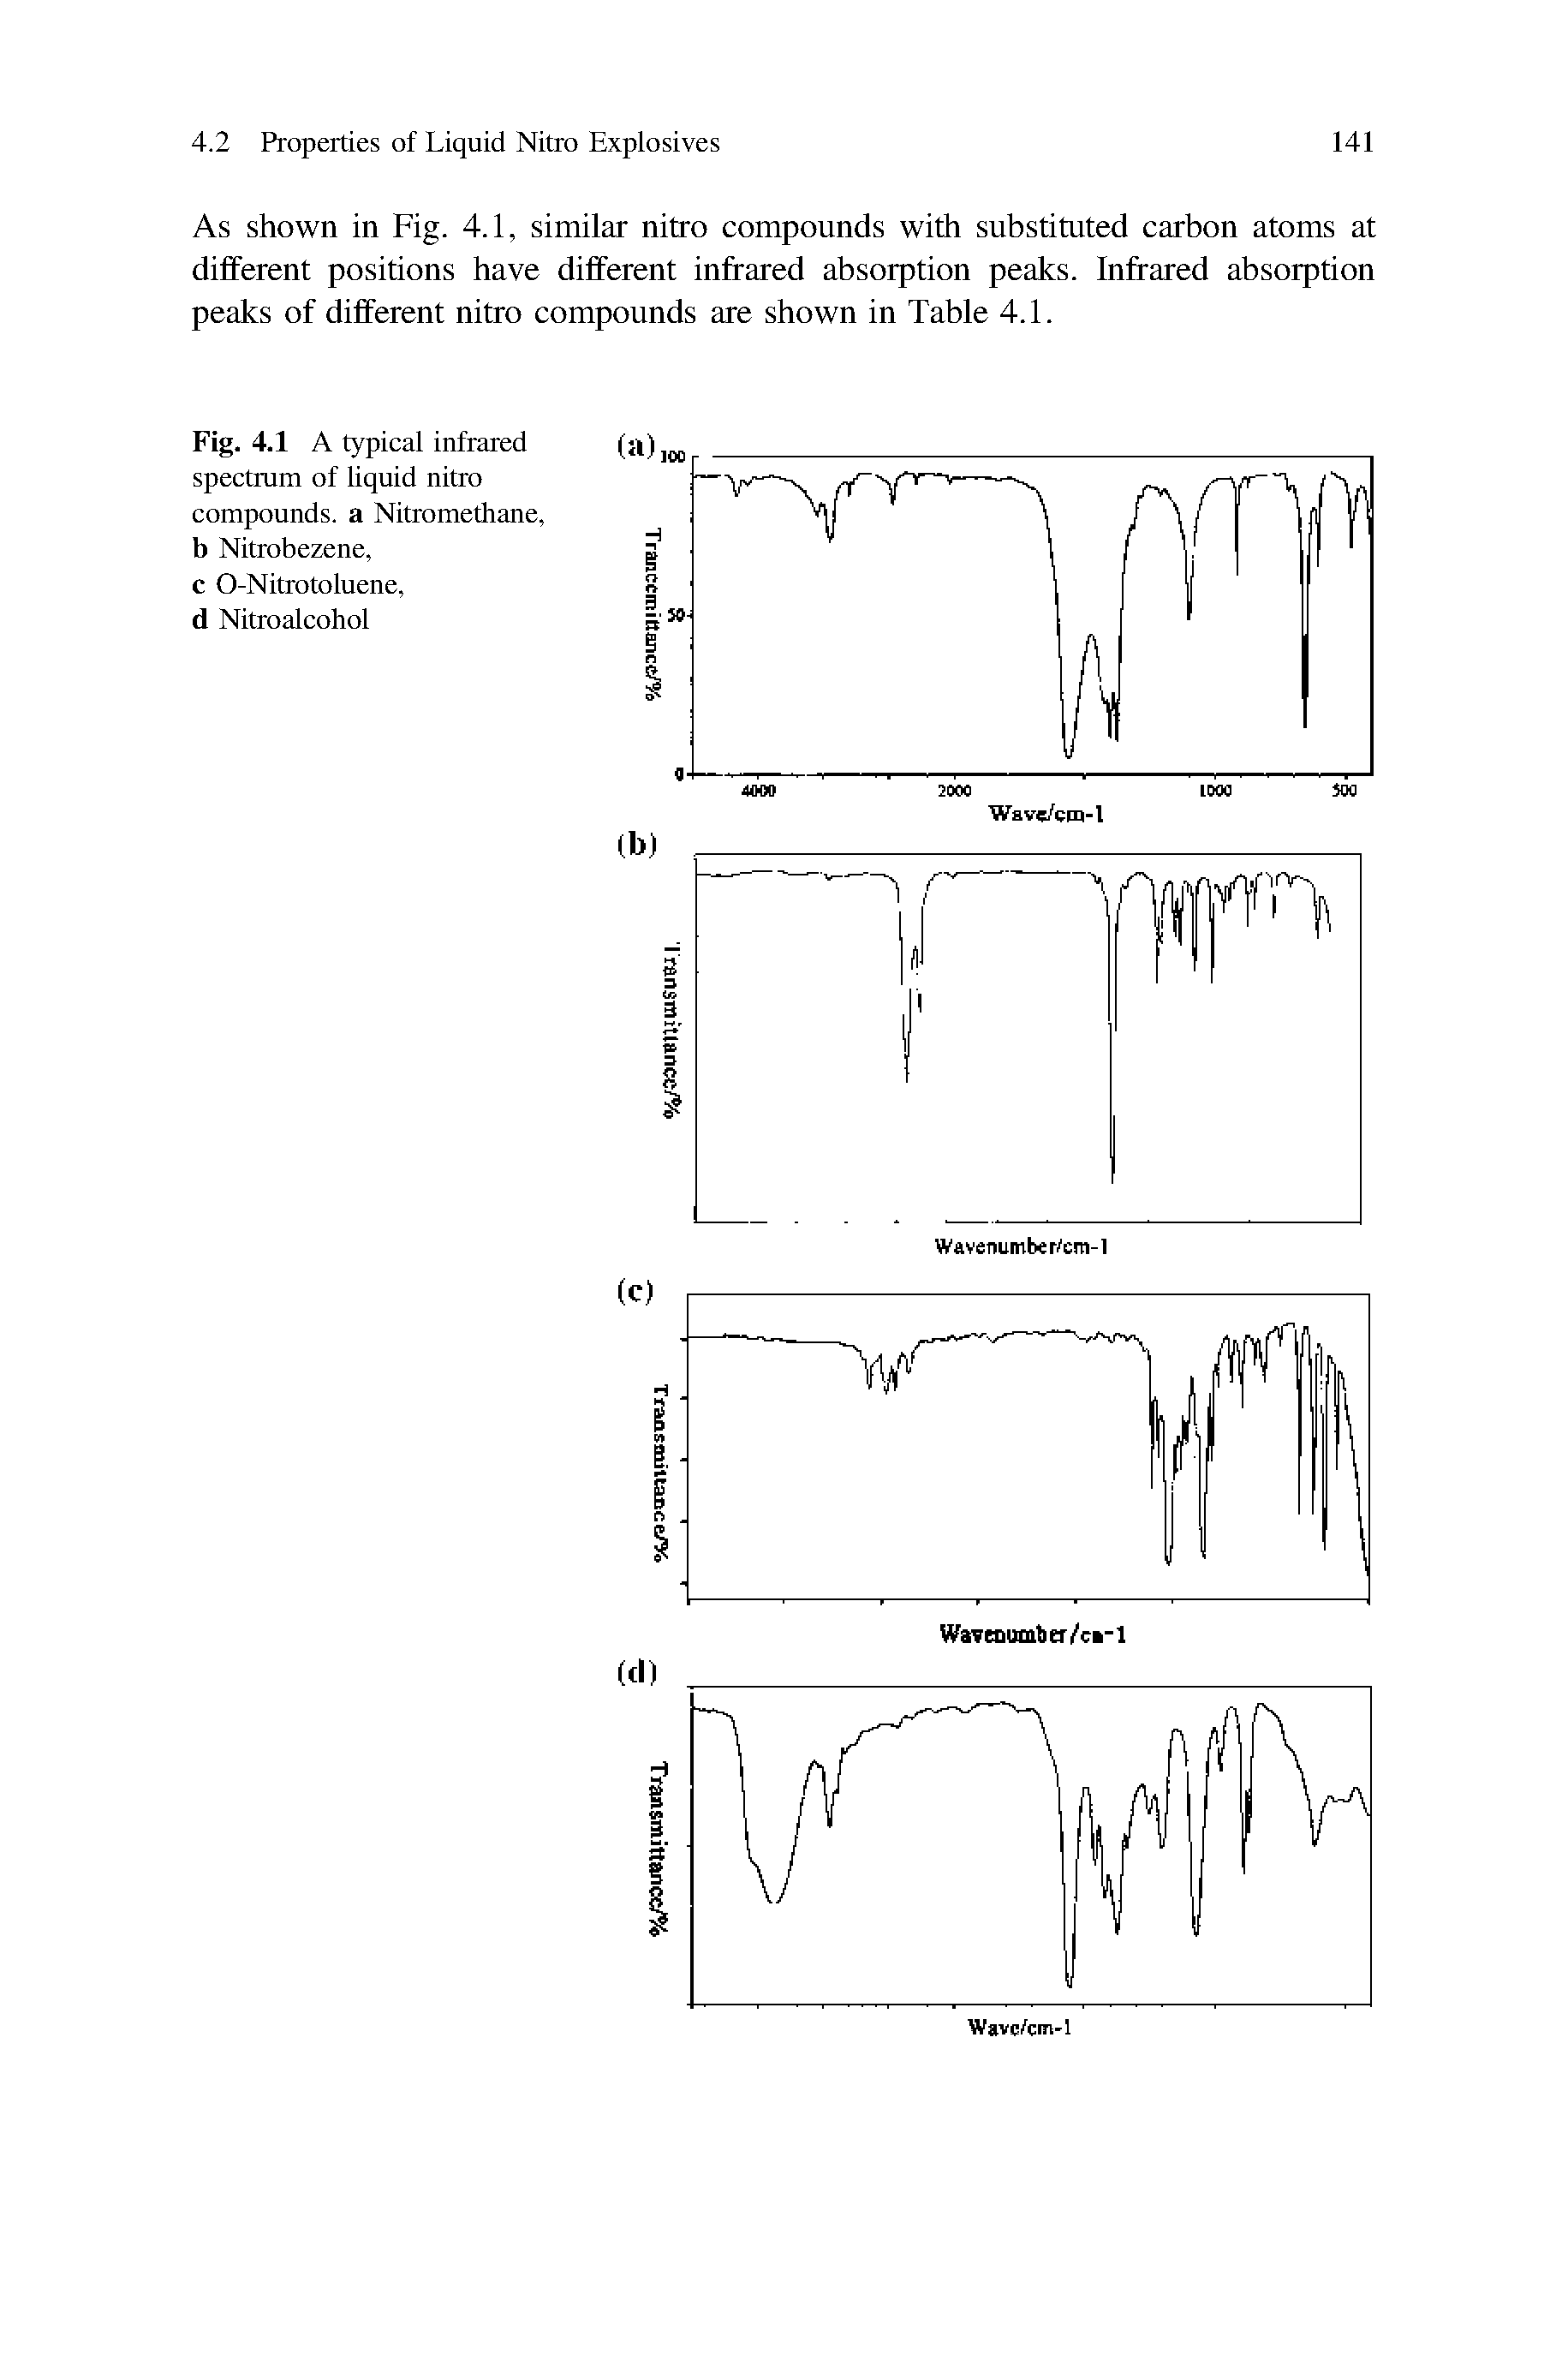 Fig. 4.1 A typical infrared spectrum of liquid nitro compounds, a Nitromethane, b Nitrobezene, c O-Nitrotoluene, d Nitroalcohol...